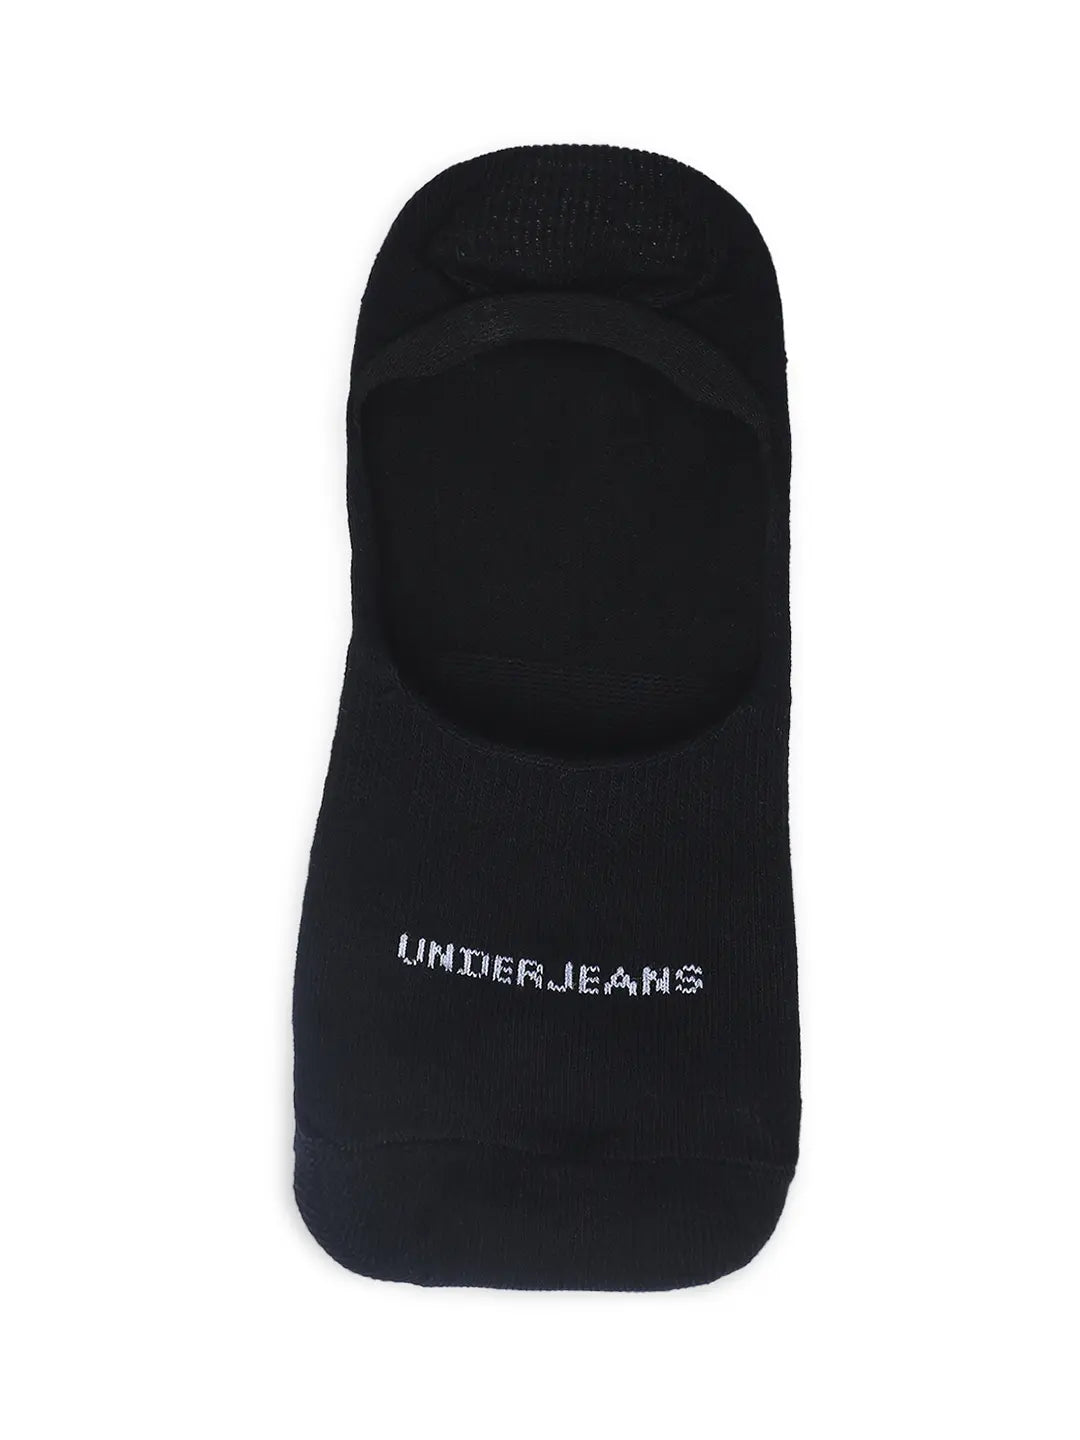 Men Black Cotton Blend No Show Socks - Pack Of 2 - Underjeans by Spykar